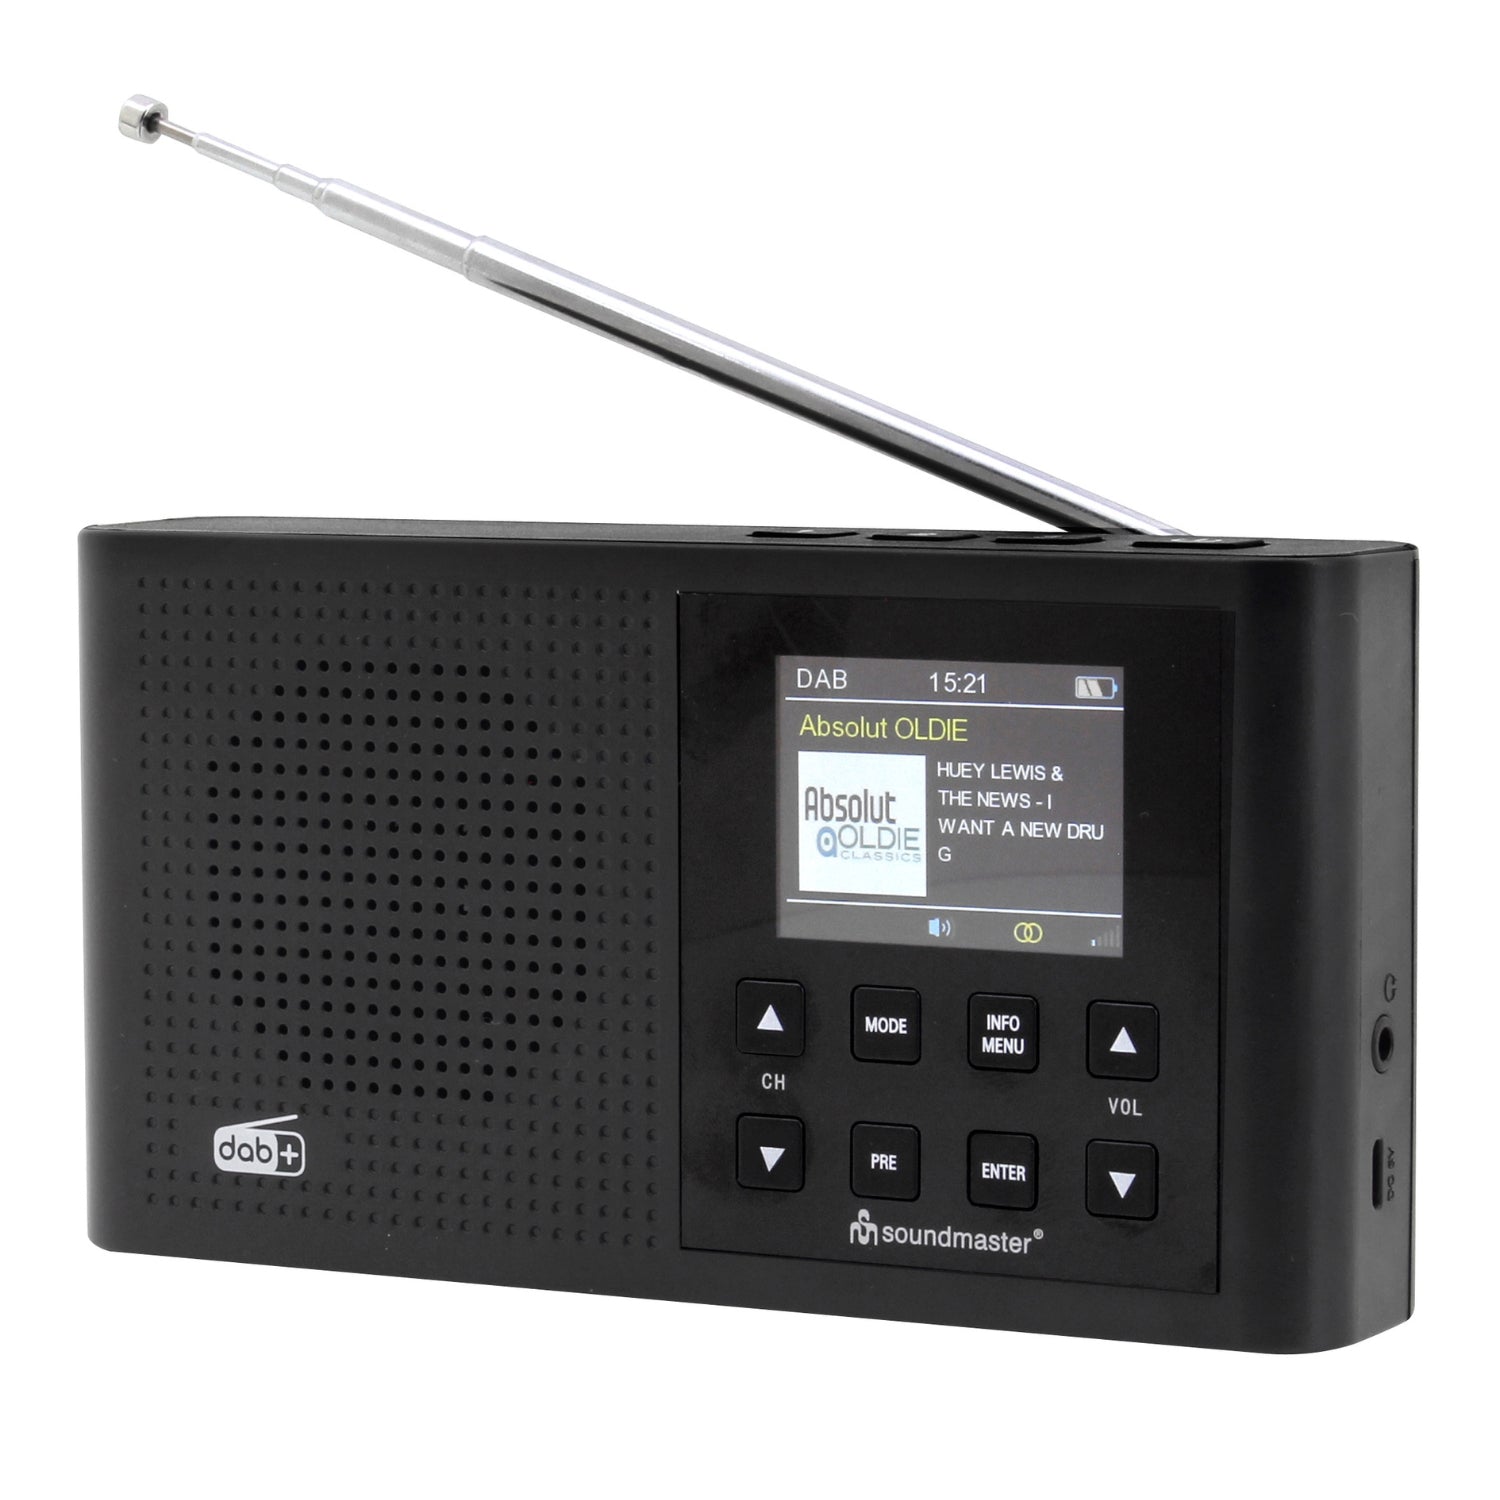 Soundmaster DAB165SW kleines Digitalradio DAB+ UKW-RDS Radio Akku wiederaufladbar Farbdisplay